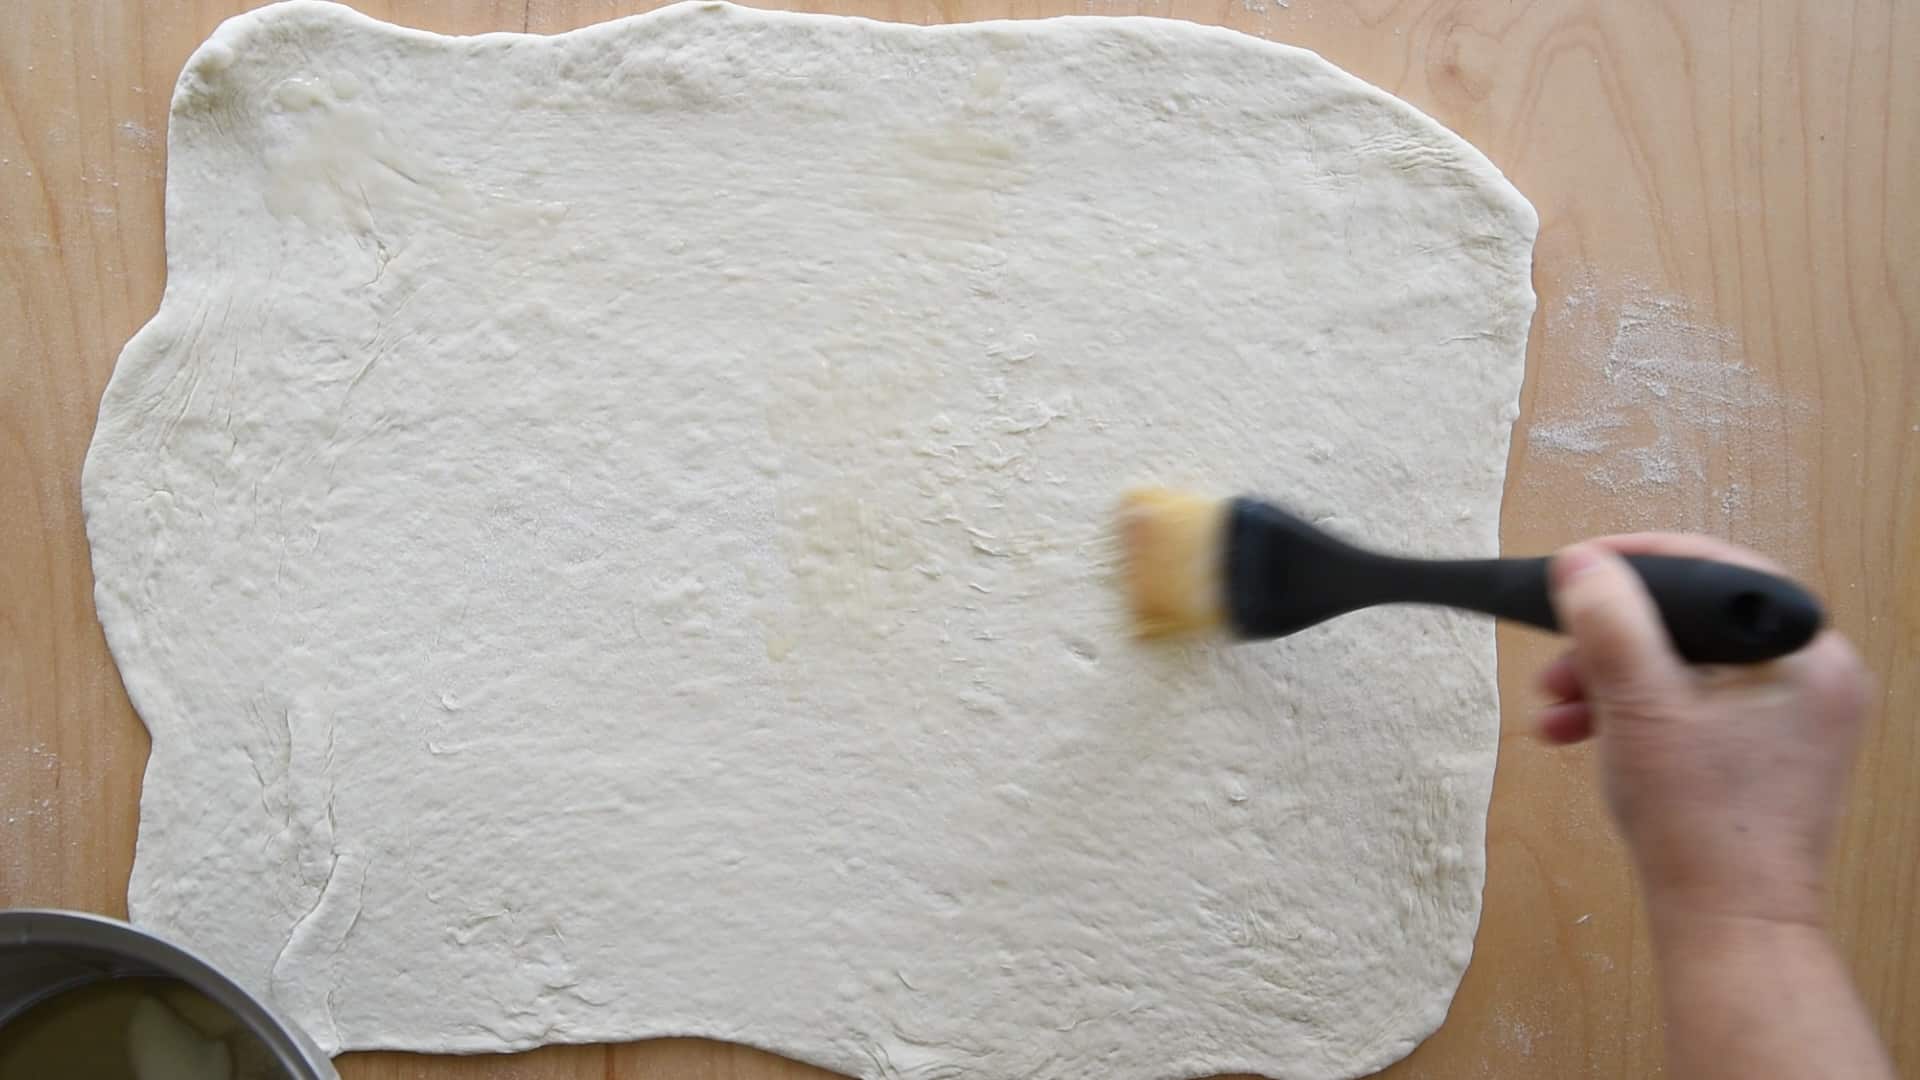 Brush the dough with lard